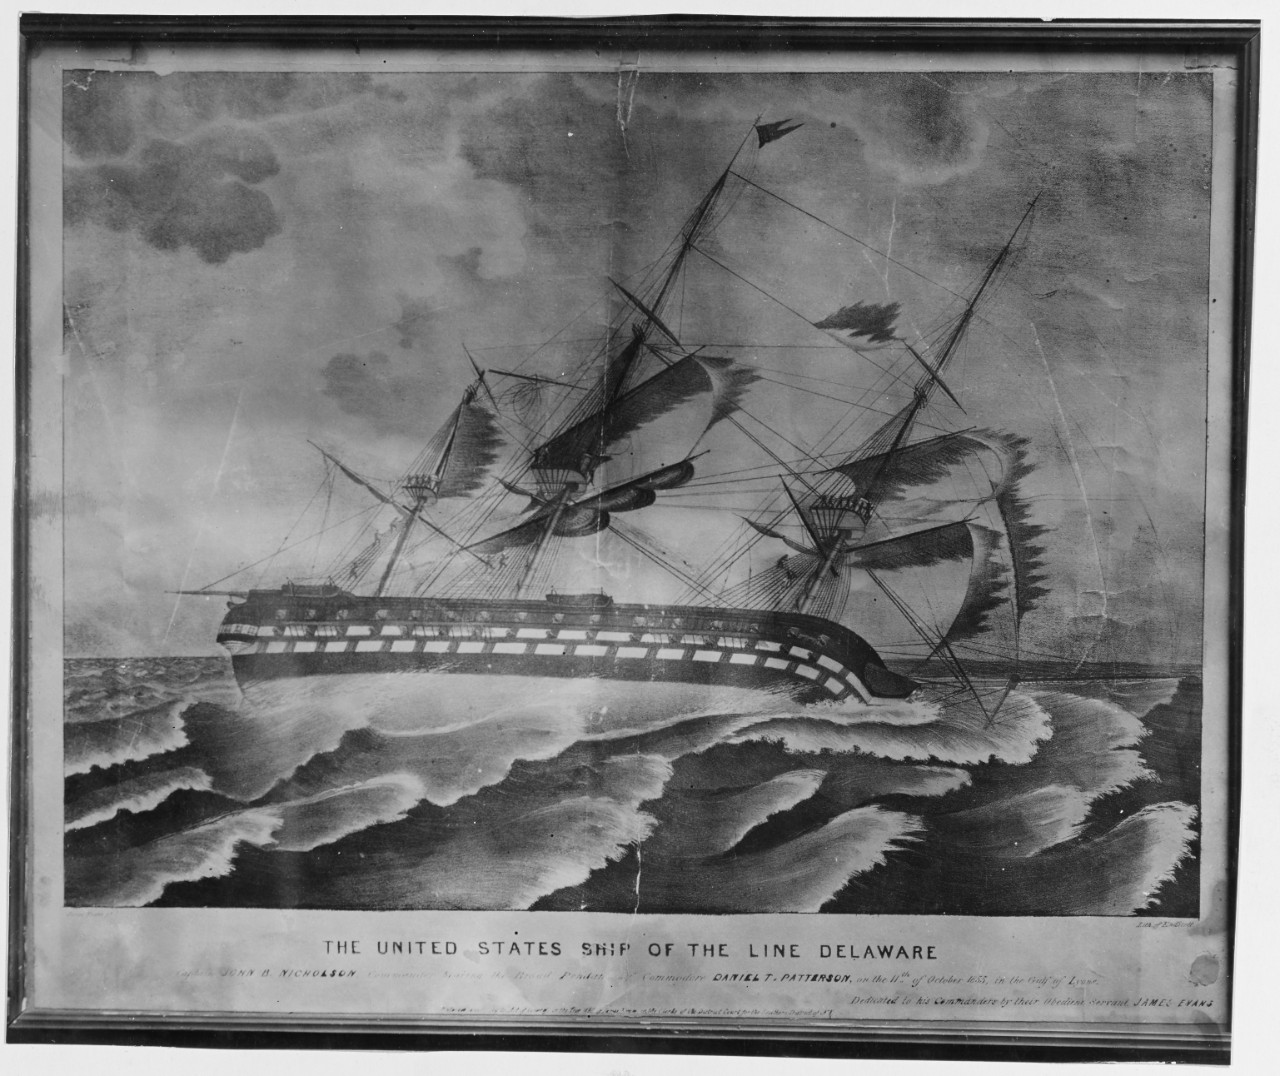 U.S. ship of the line DELAWARE (1817-1861)